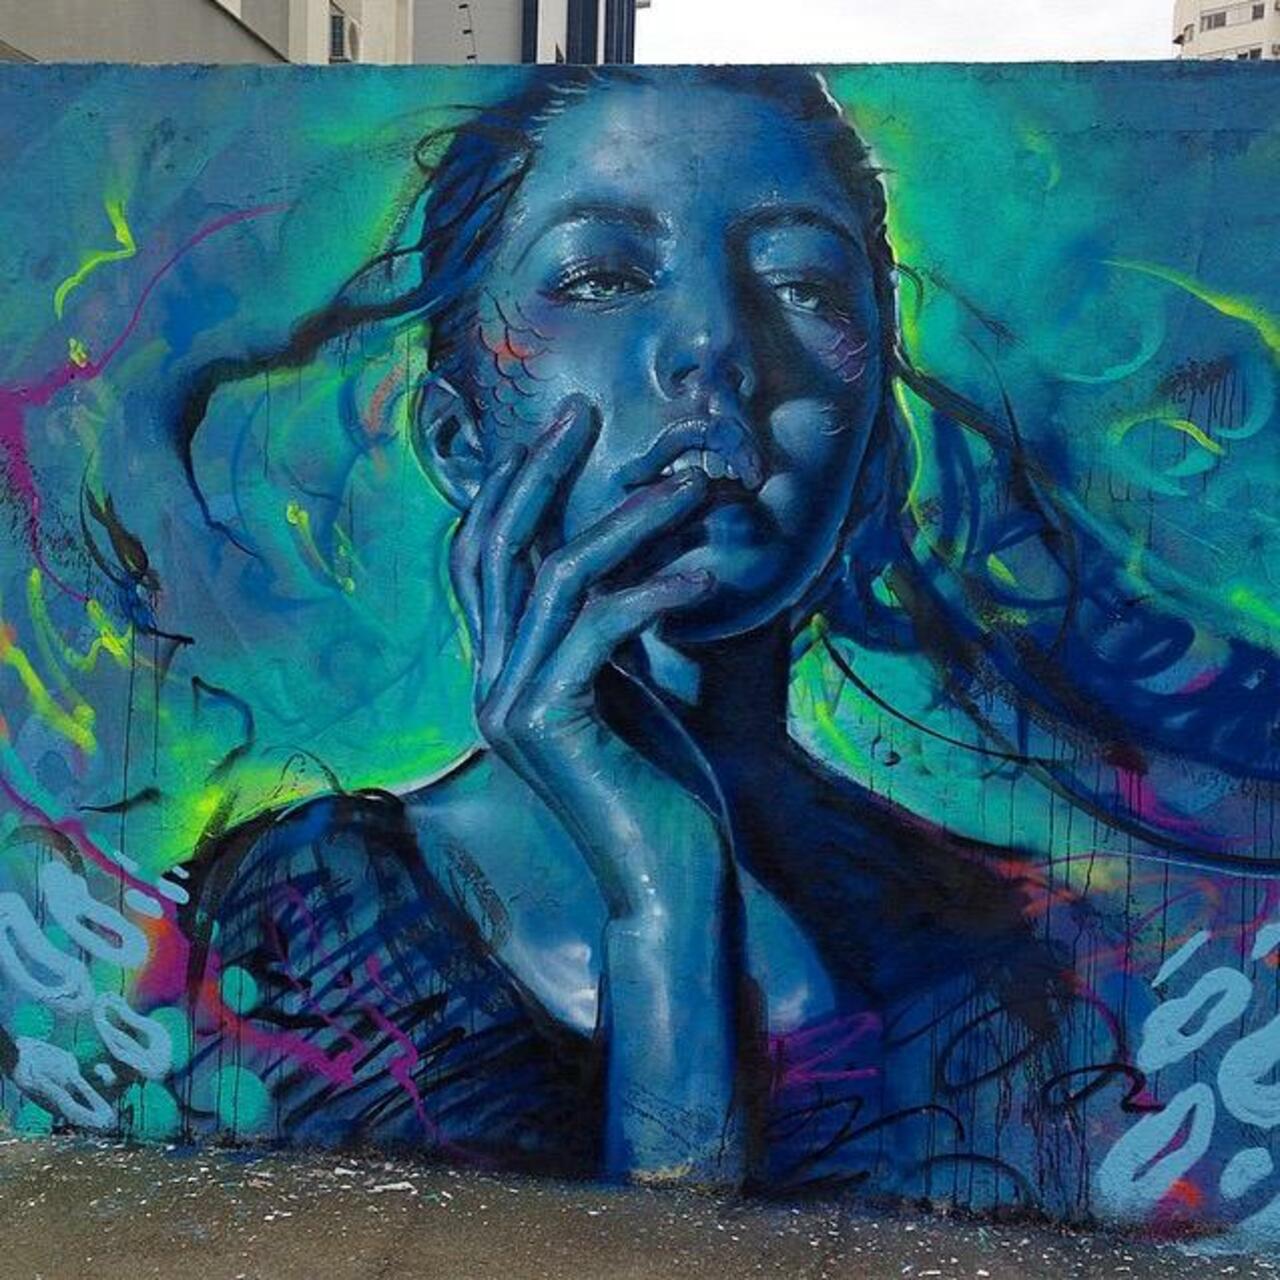 Thiago Valdi new Street Art piece titled 'Day Dreamer'

#art #mural #graffiti #streetart http://t.co/KUWdsJwQH7